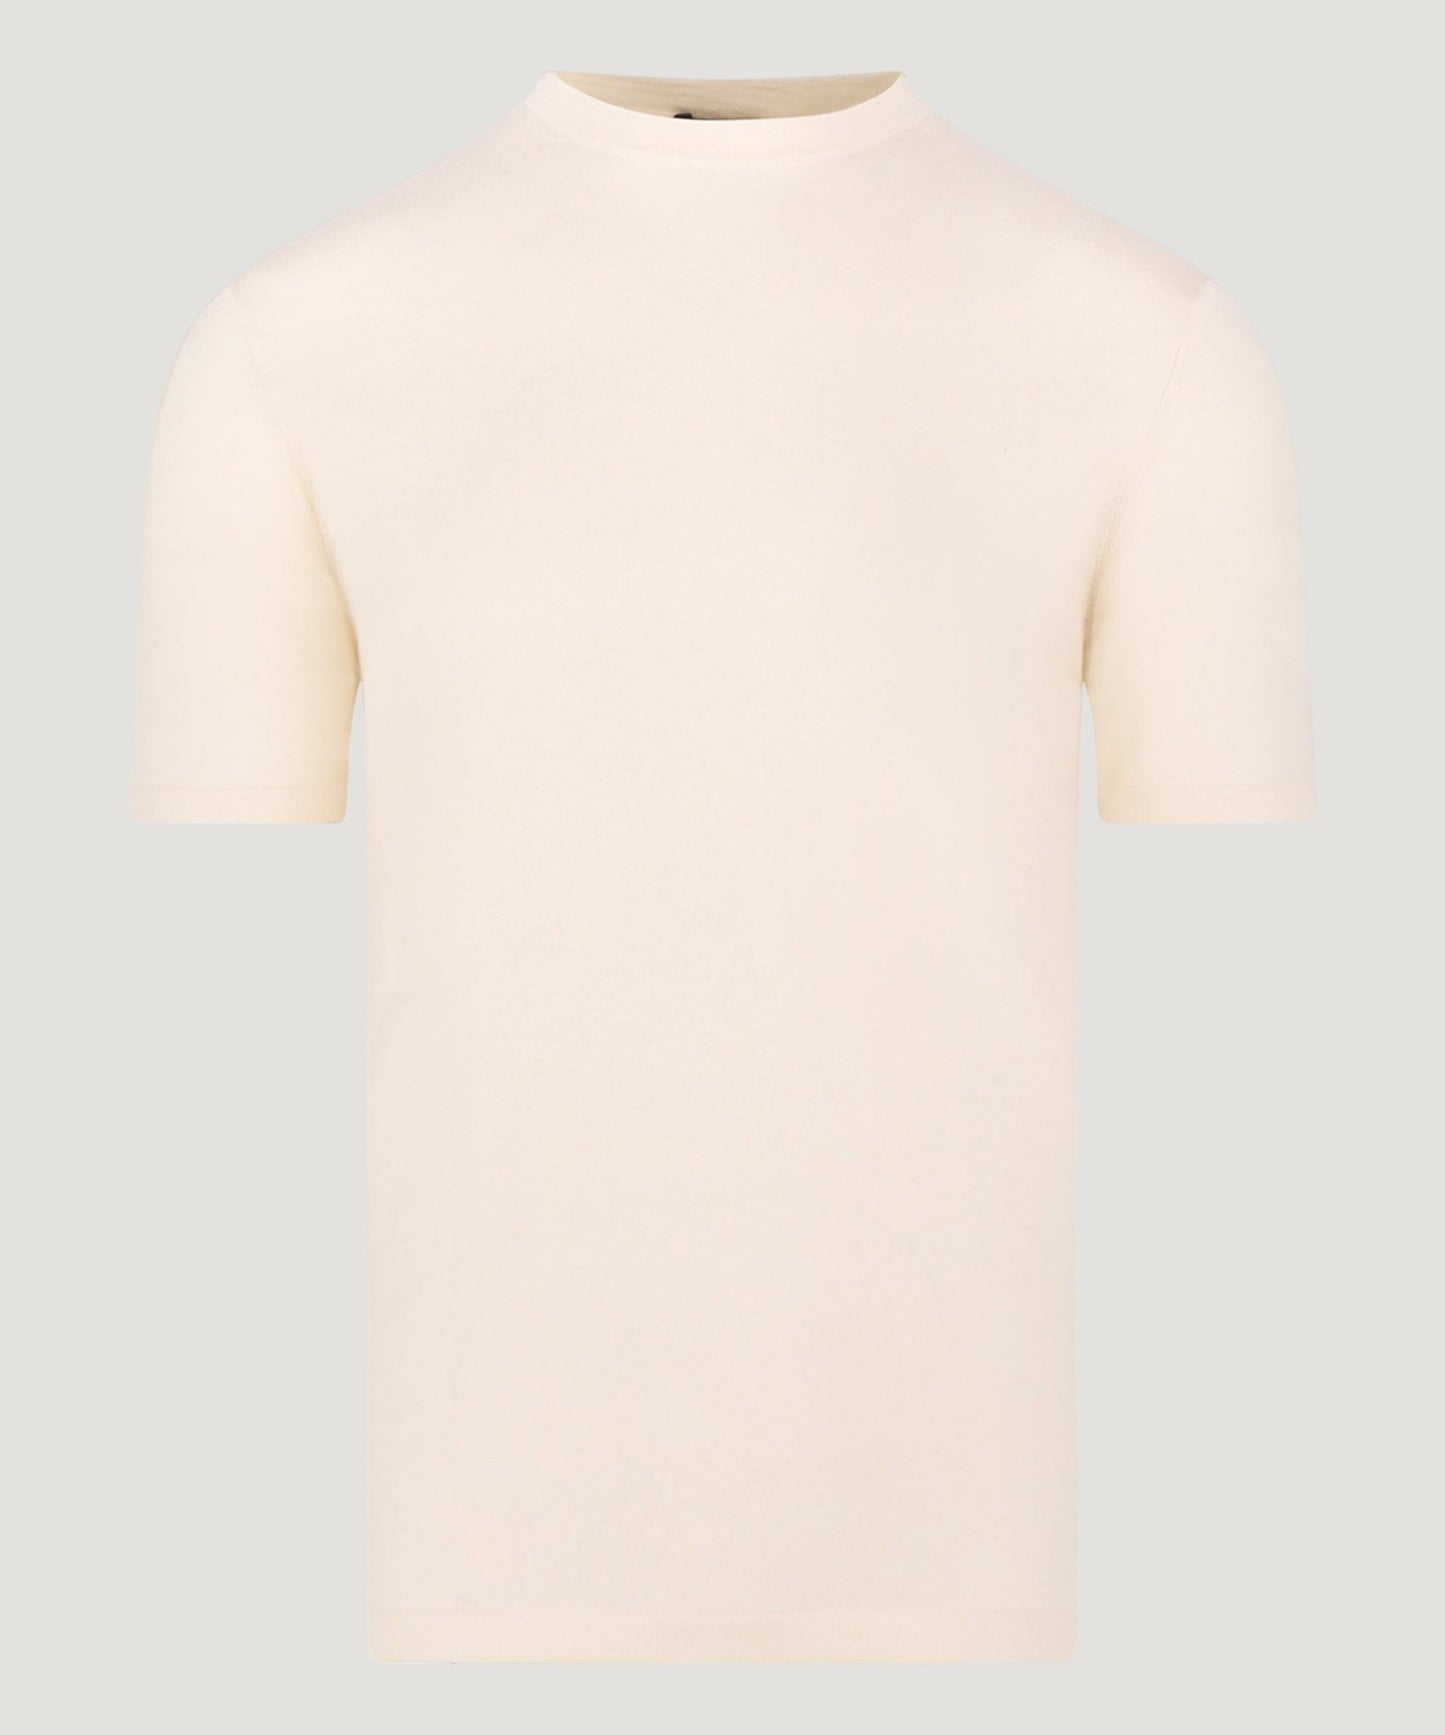 SOCI3TY T-shirt katoen/zijde off-white - The Society Shop